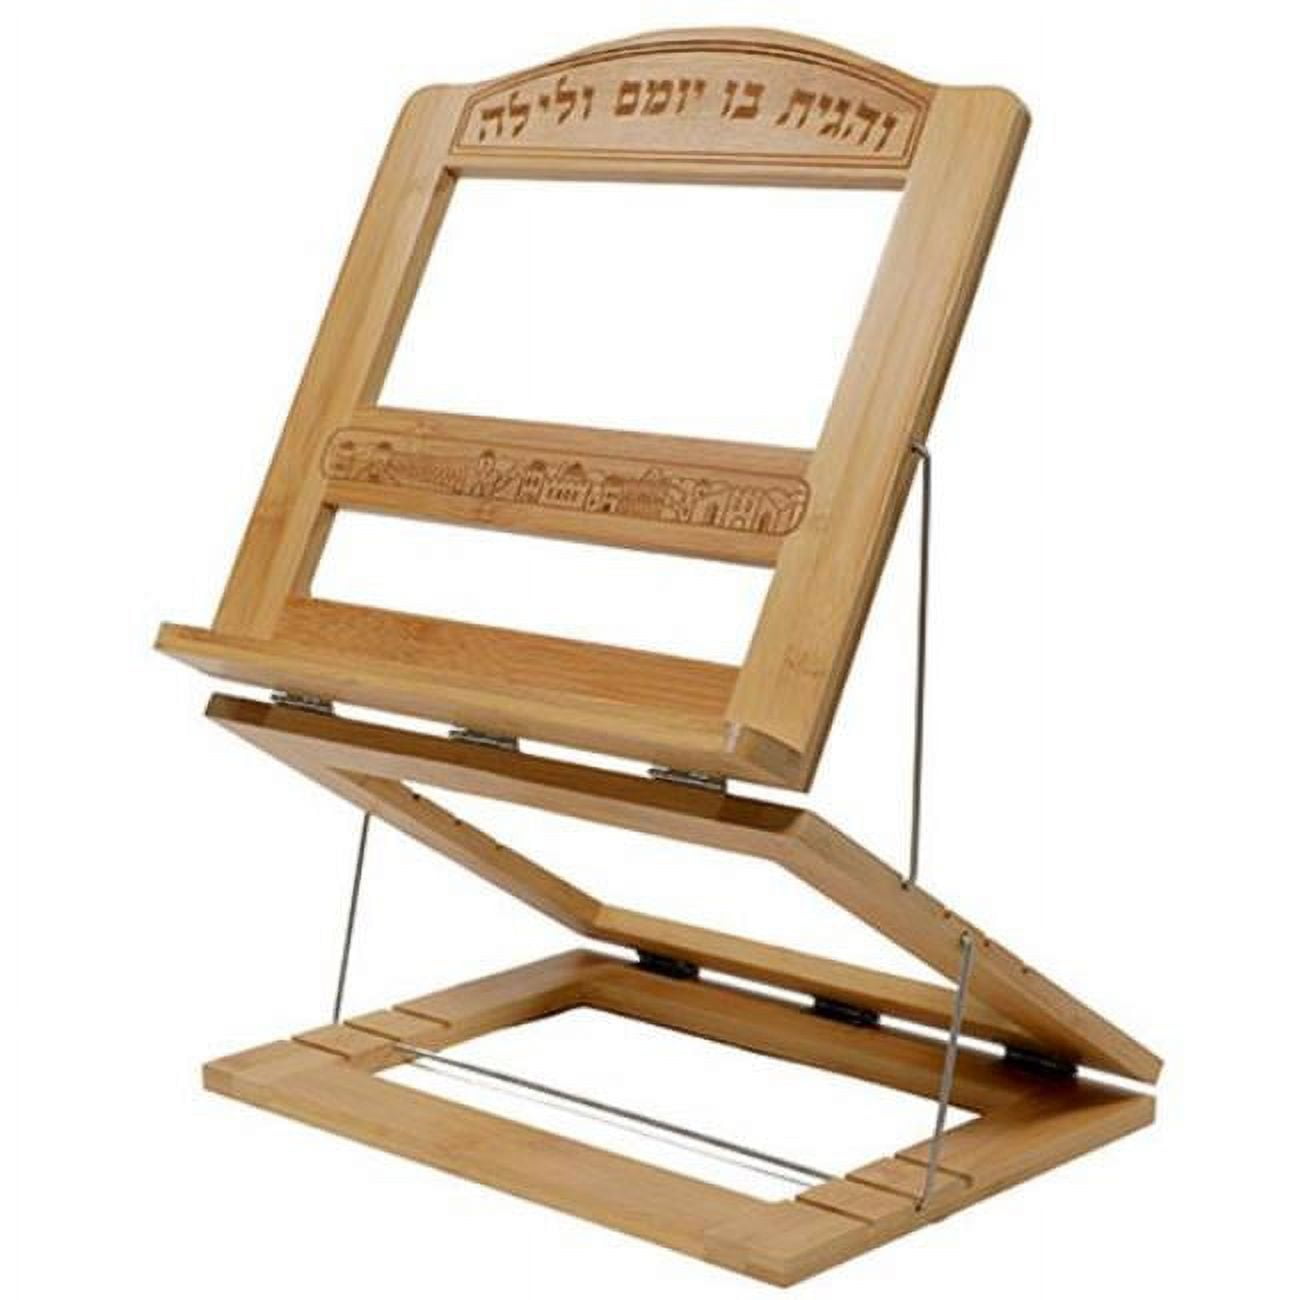 Picture of Art Judaica 43330 30 x 33 cm Elegant Wood Shtender with 3 Levels